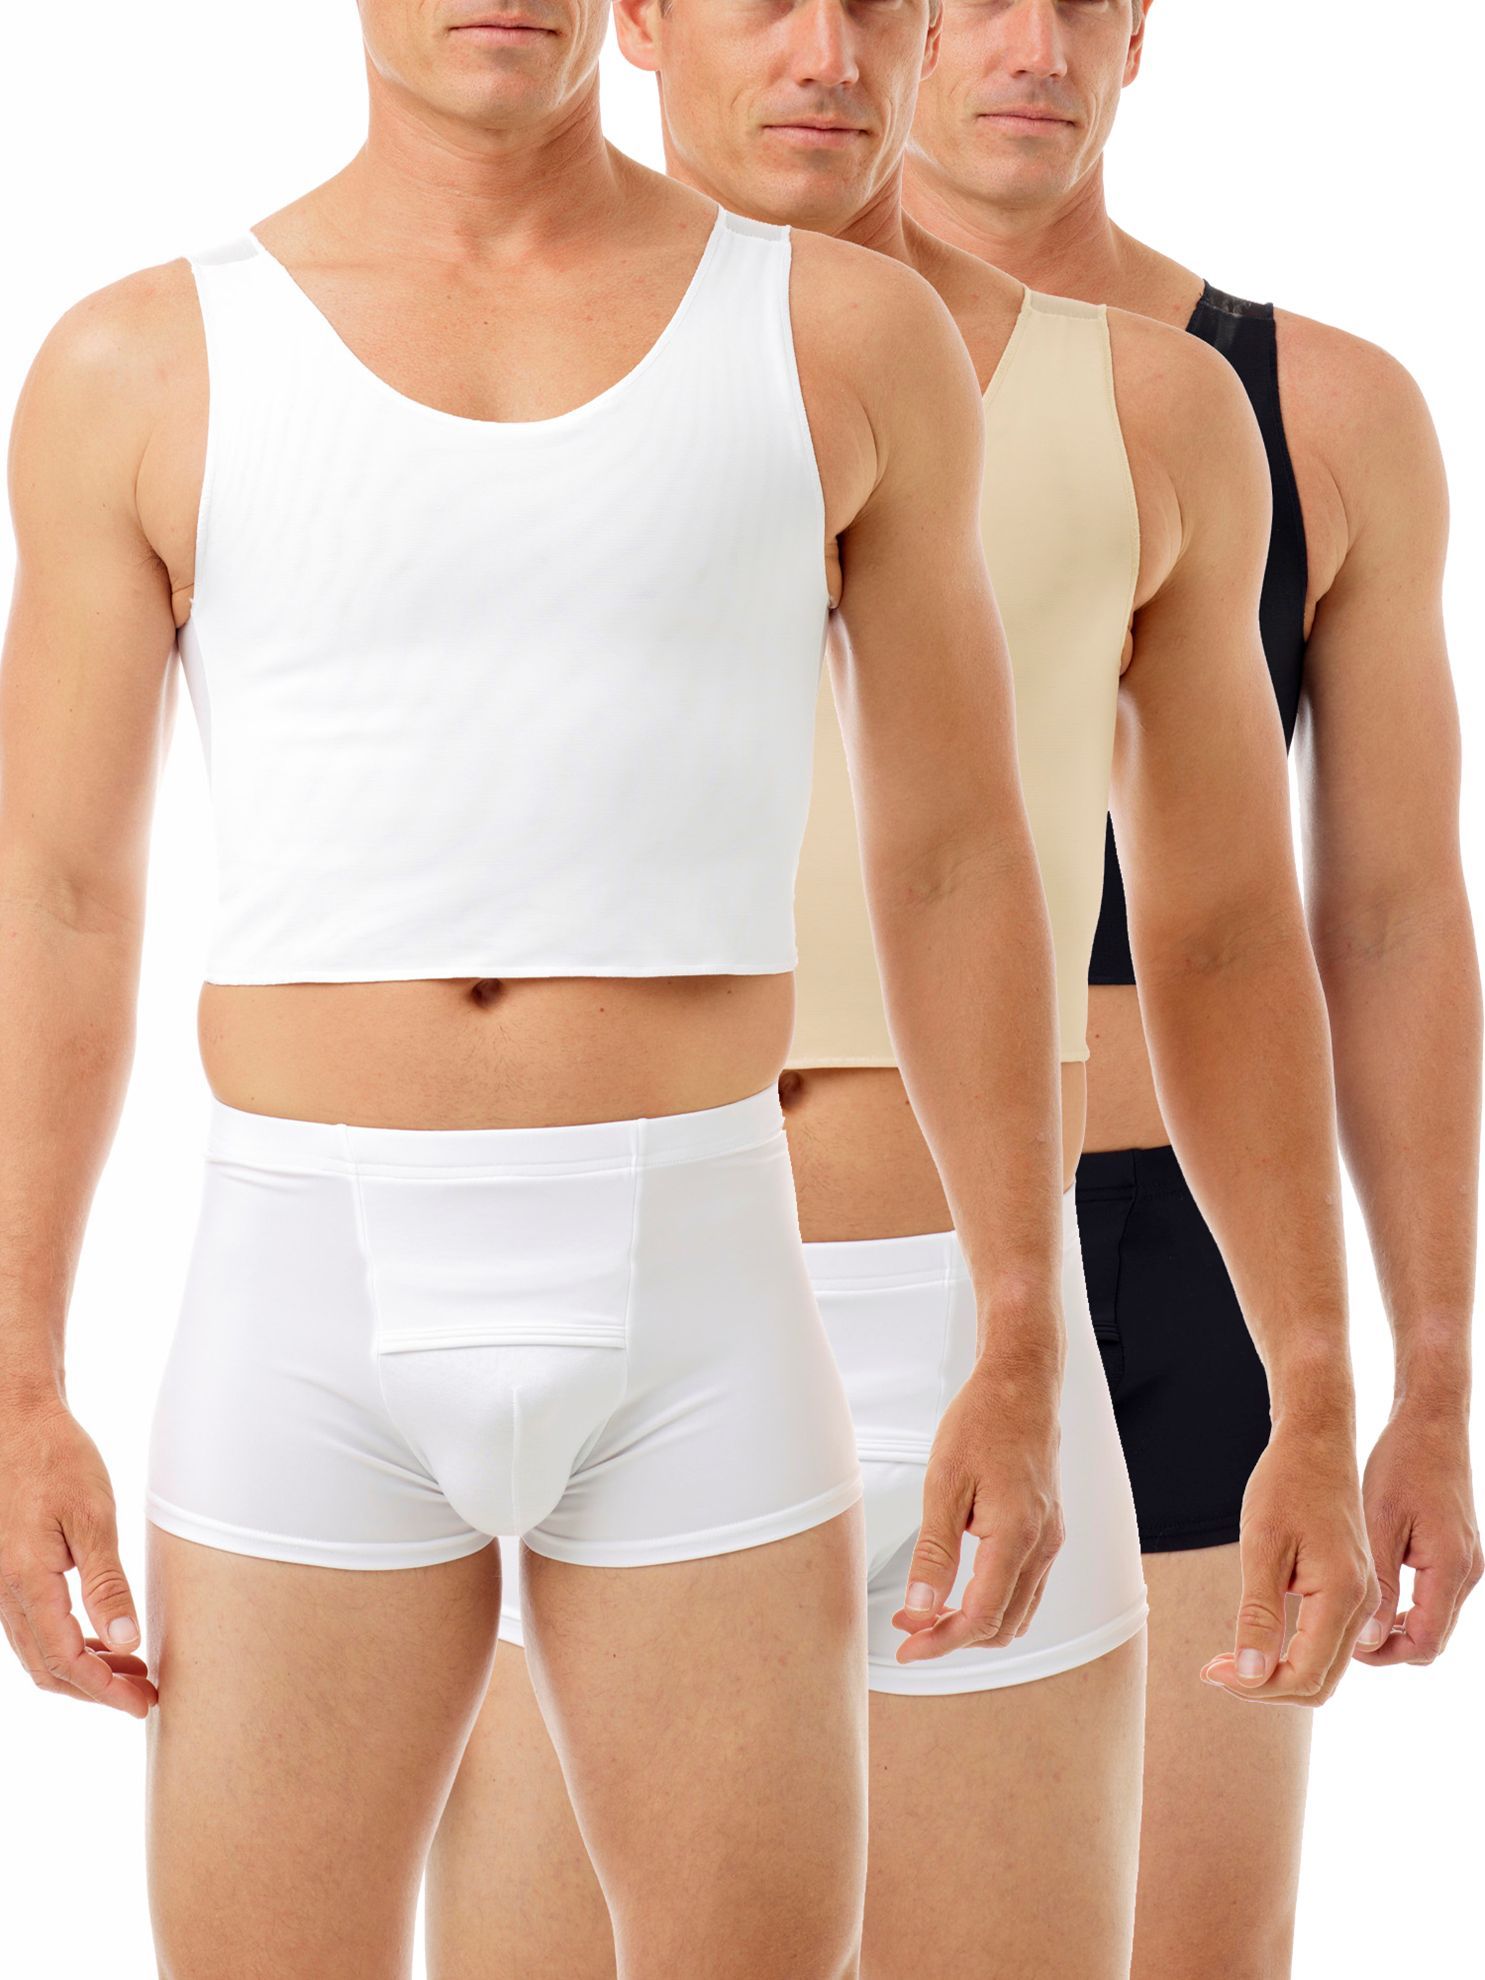 Underworks Tri-Top Chest Binder, Extreme Compression Tank Top. Men  Compression Shirts, Girdles, Chest Binders, Hernia Garments